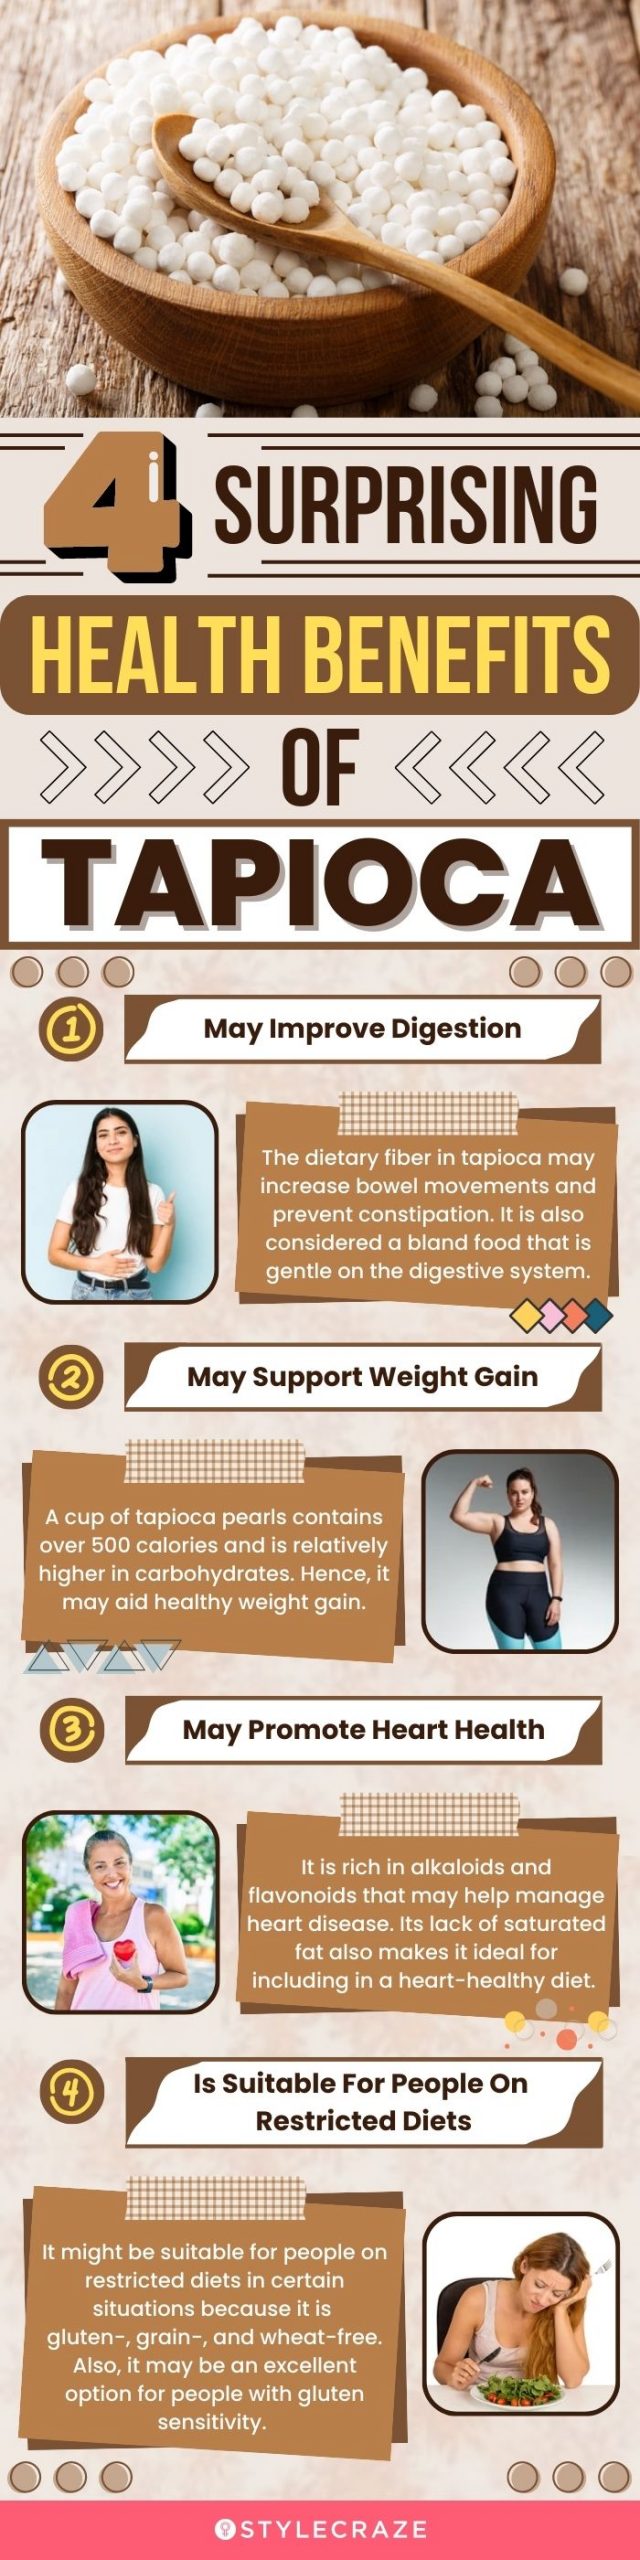 4 surprising health benefits of tapioca (infographic)